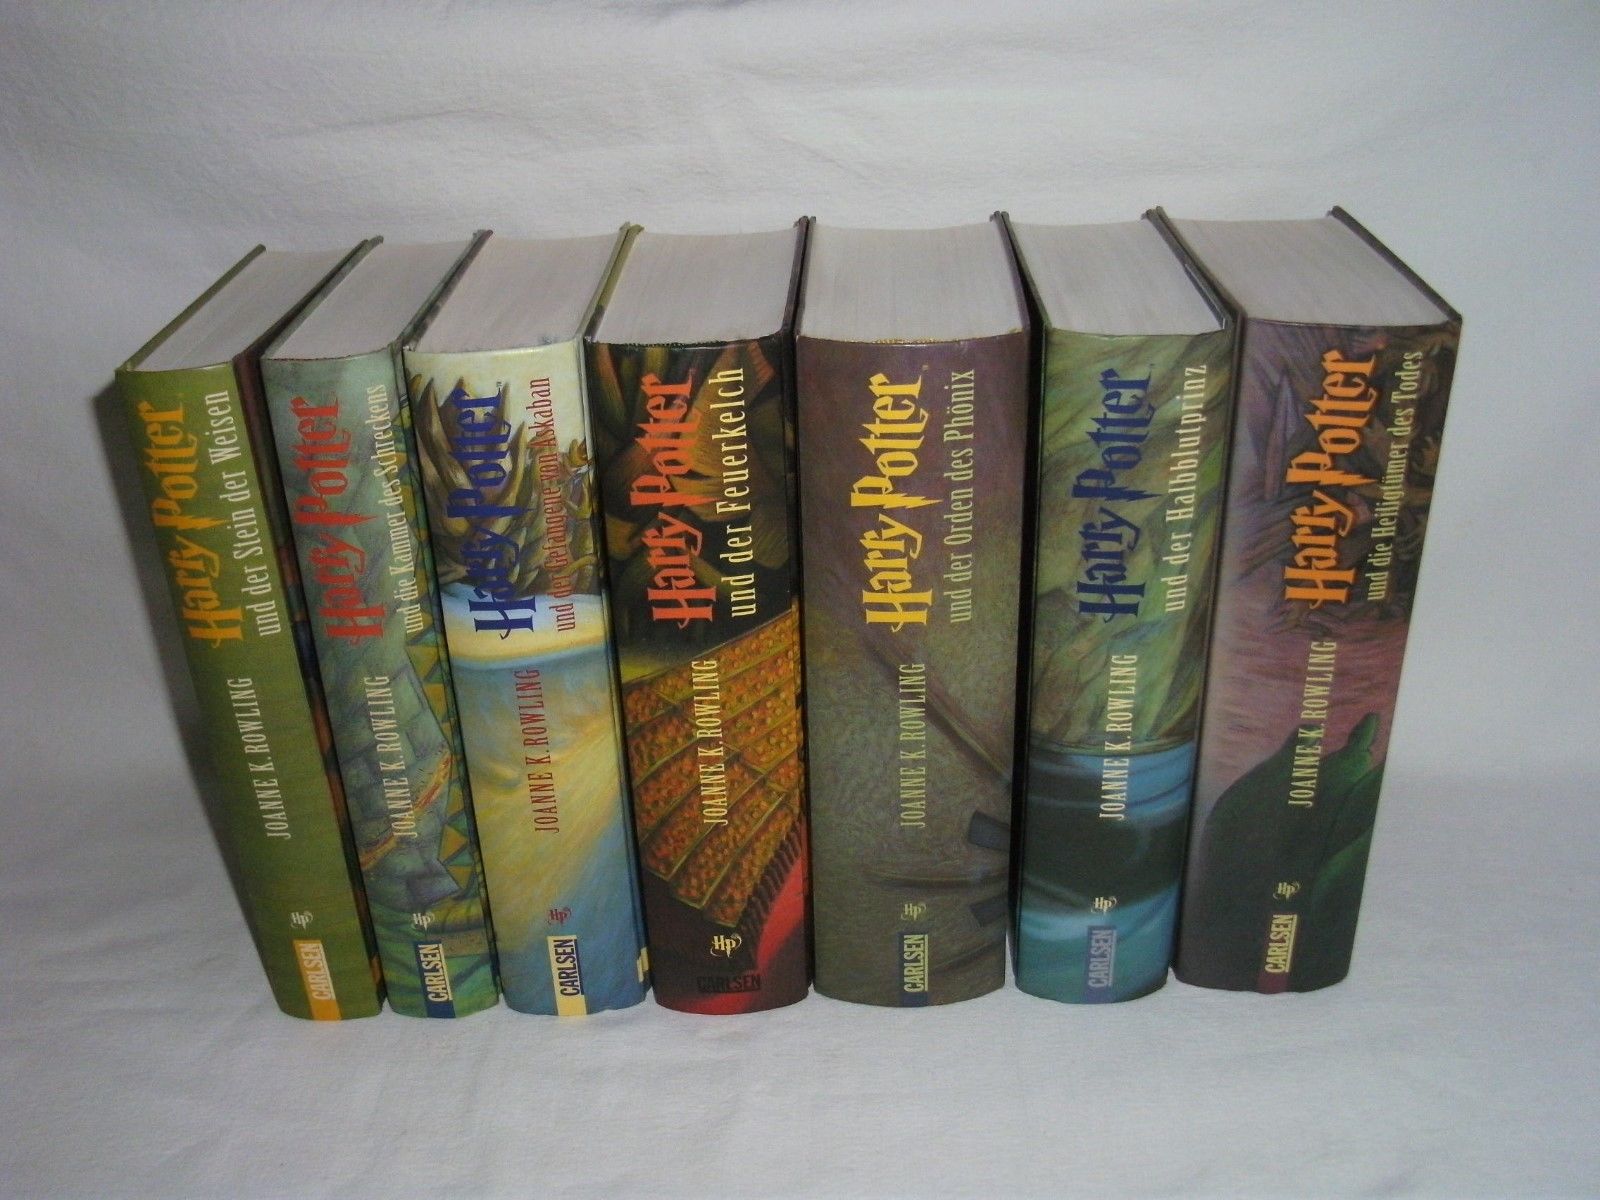 Harry Potter 7 Bücher gebunden 1 - 7 komplett  / Sehr guter Zustand / Top